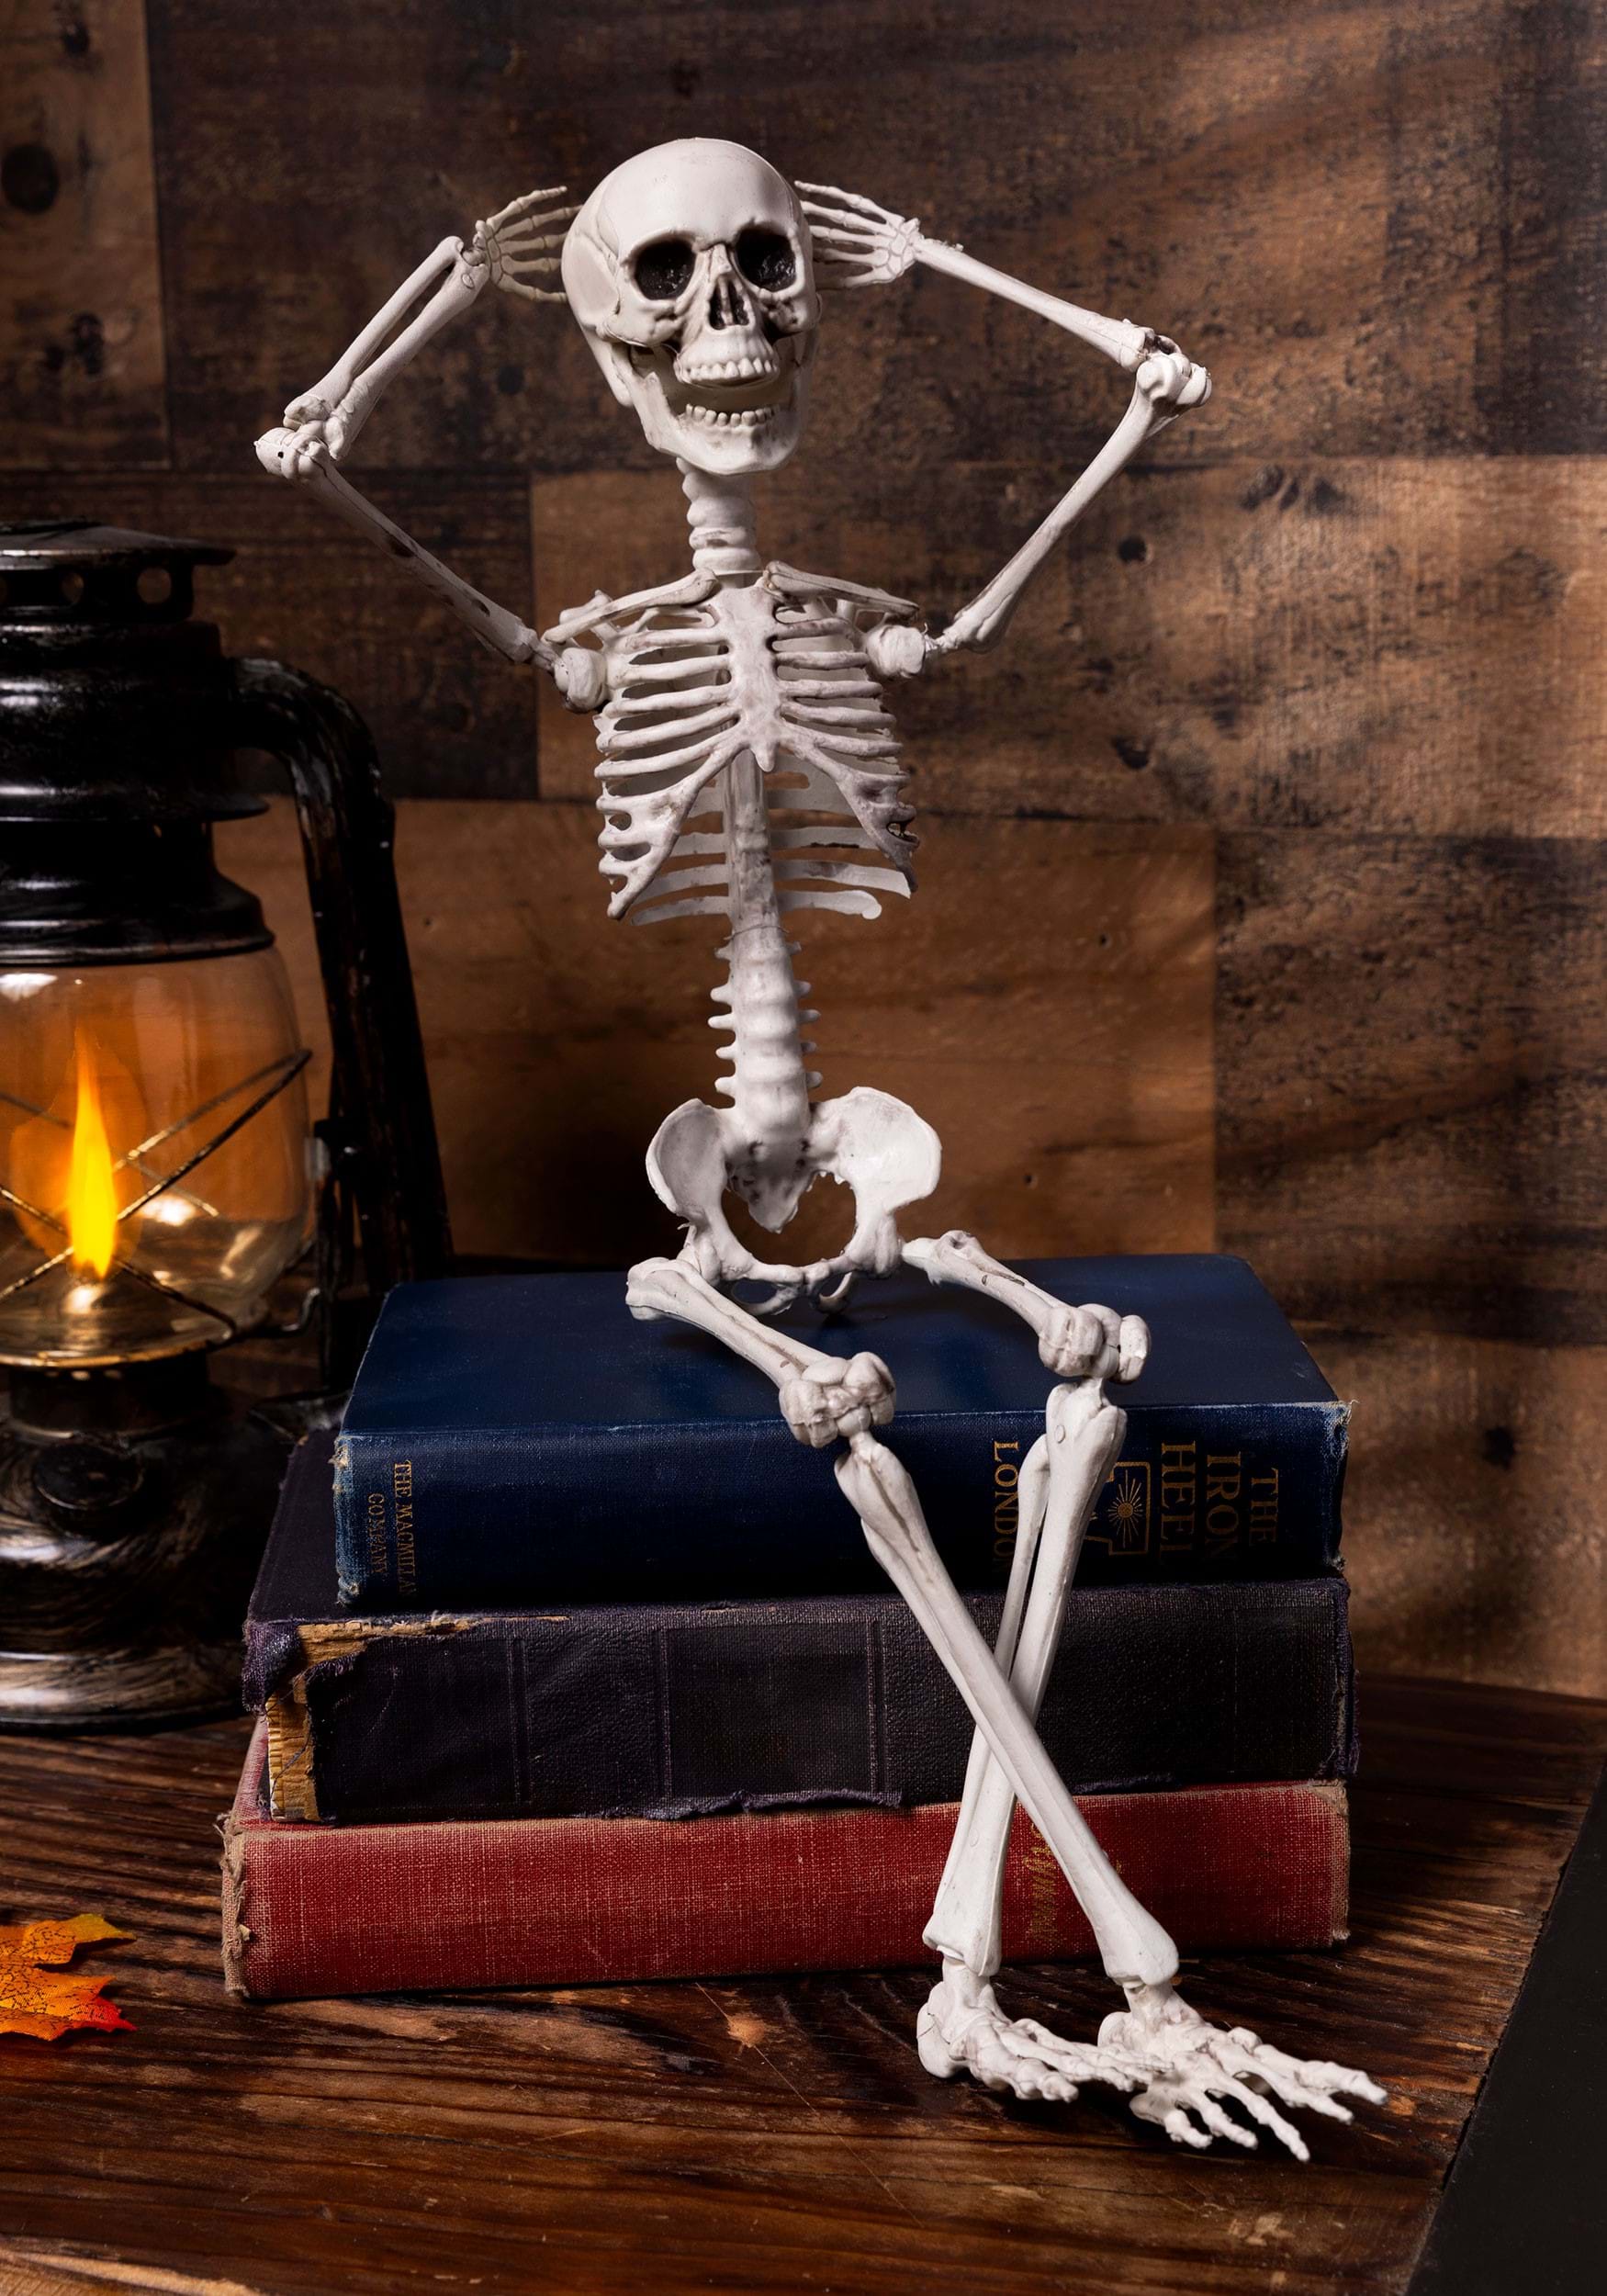 Poseable 20 Inch Skeleton Prop , Skeleton Decorations